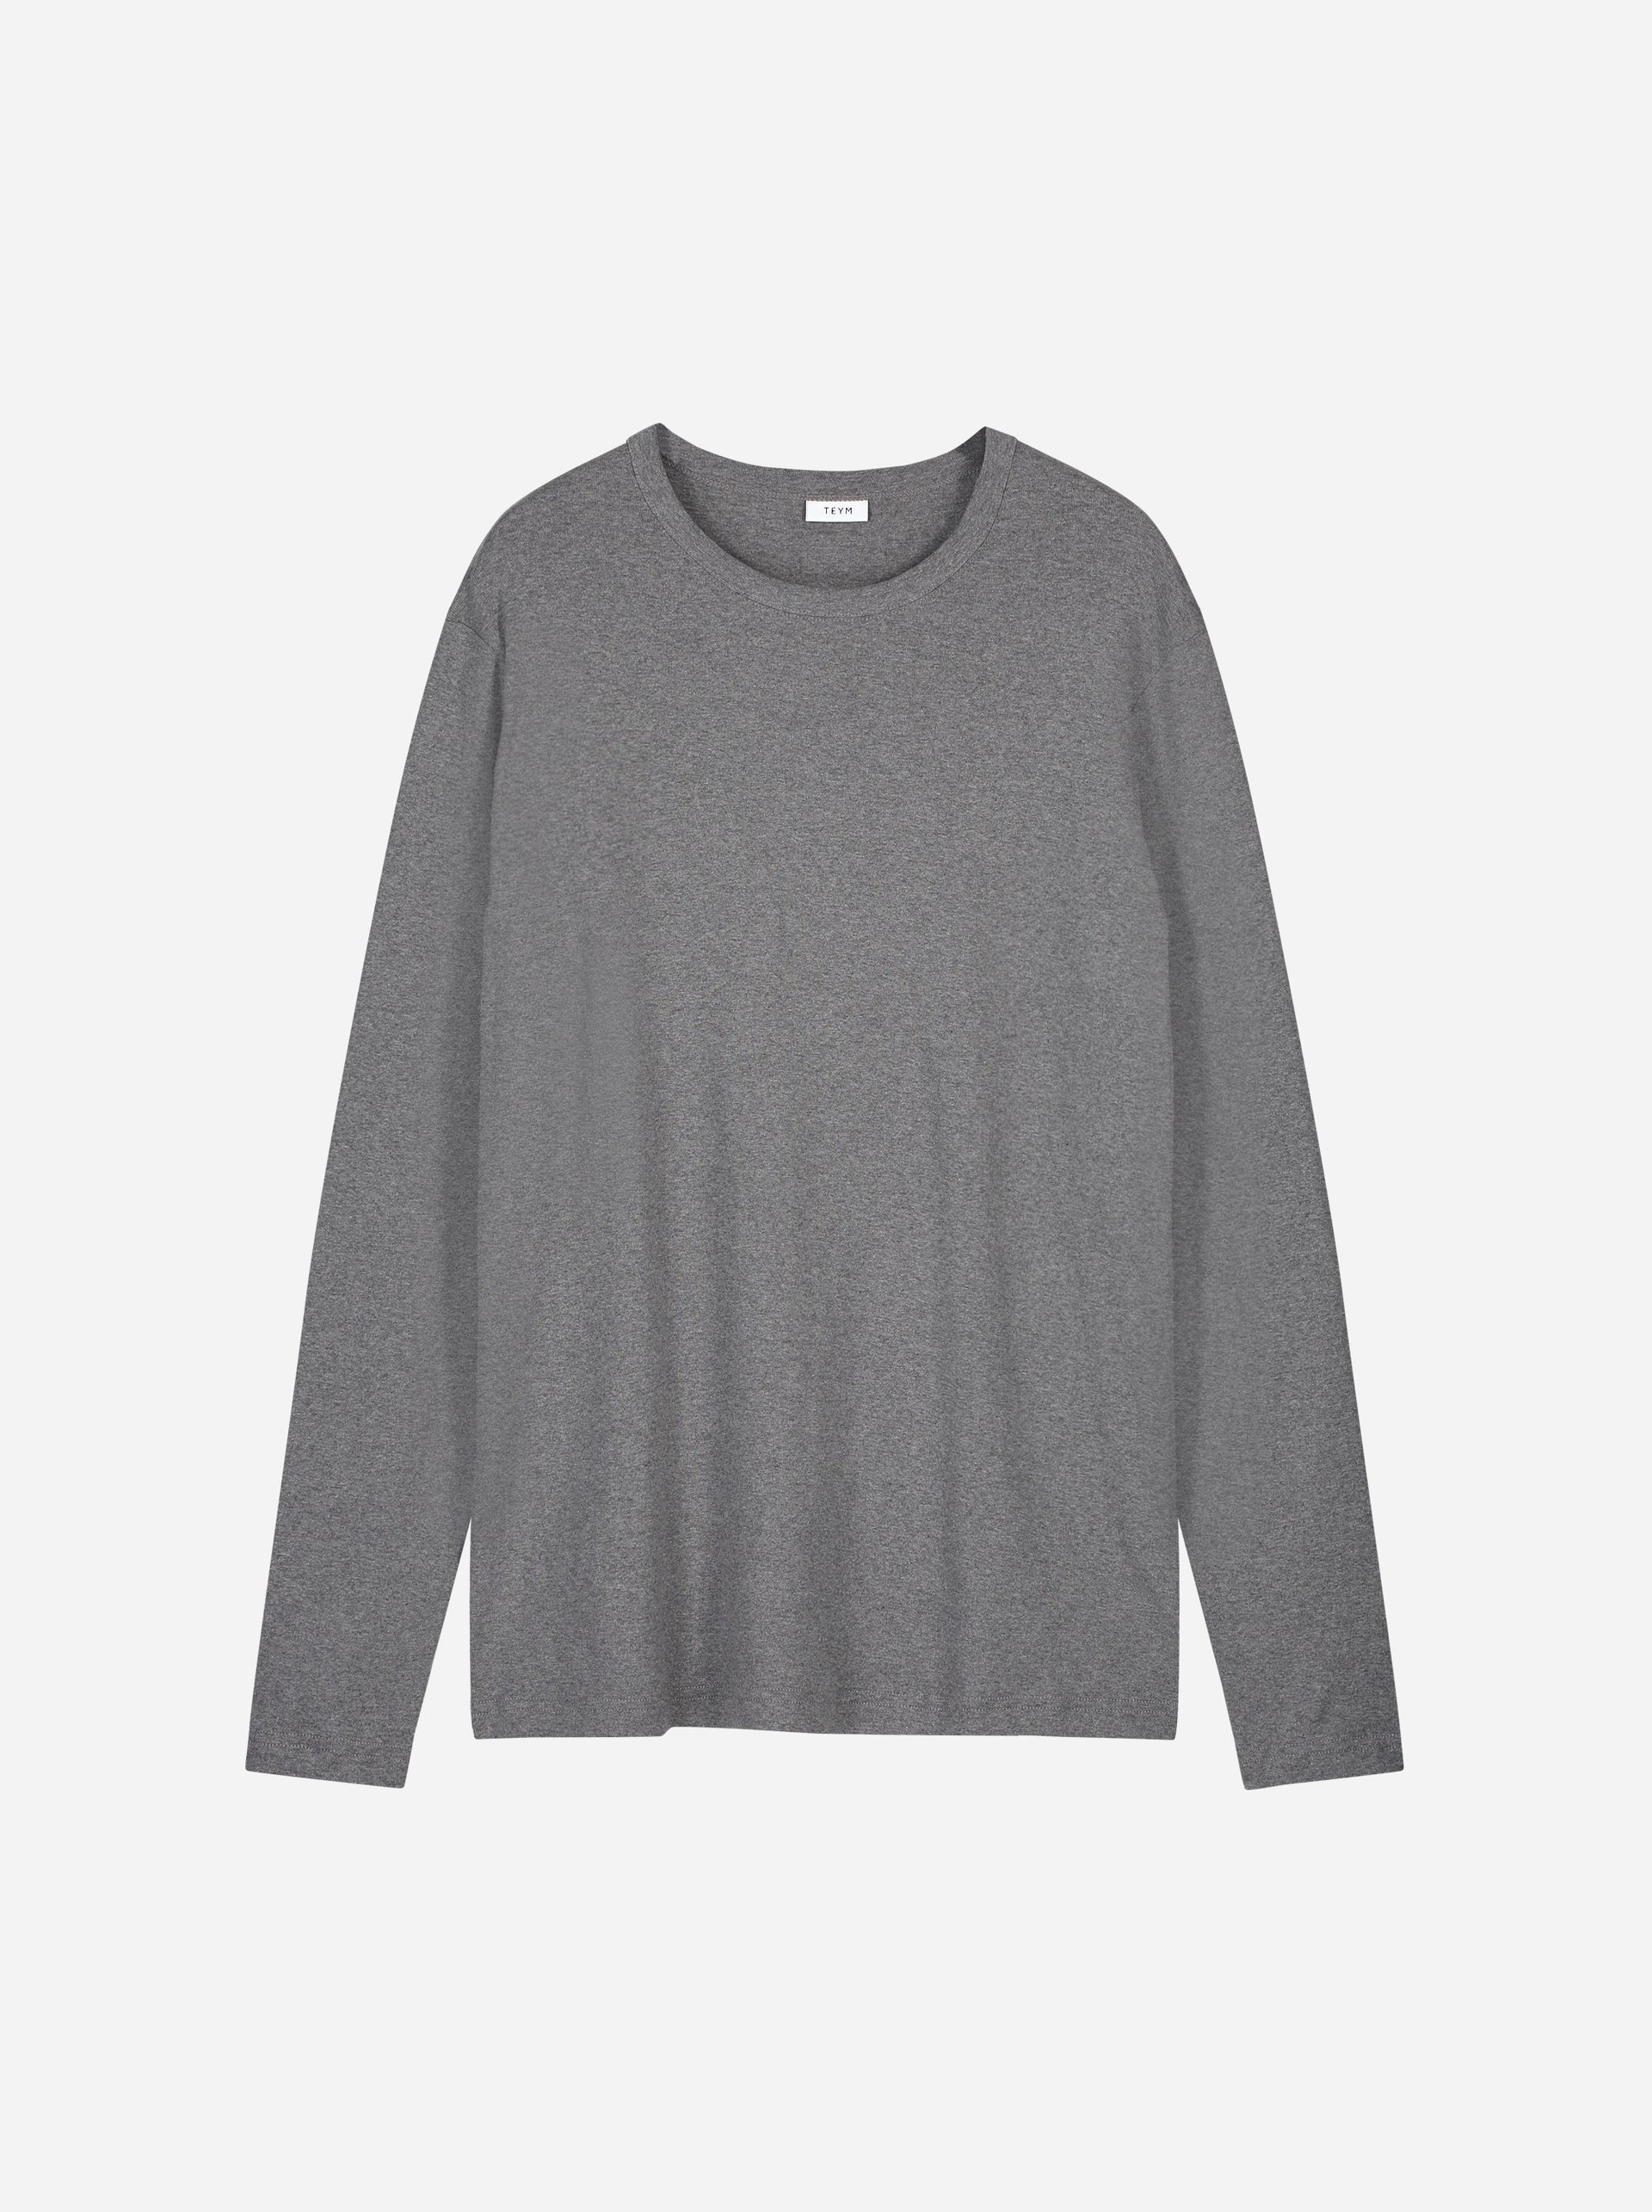 Teym - The-T-Shirt - Longsleeve - Men - Melange Grey - 4B